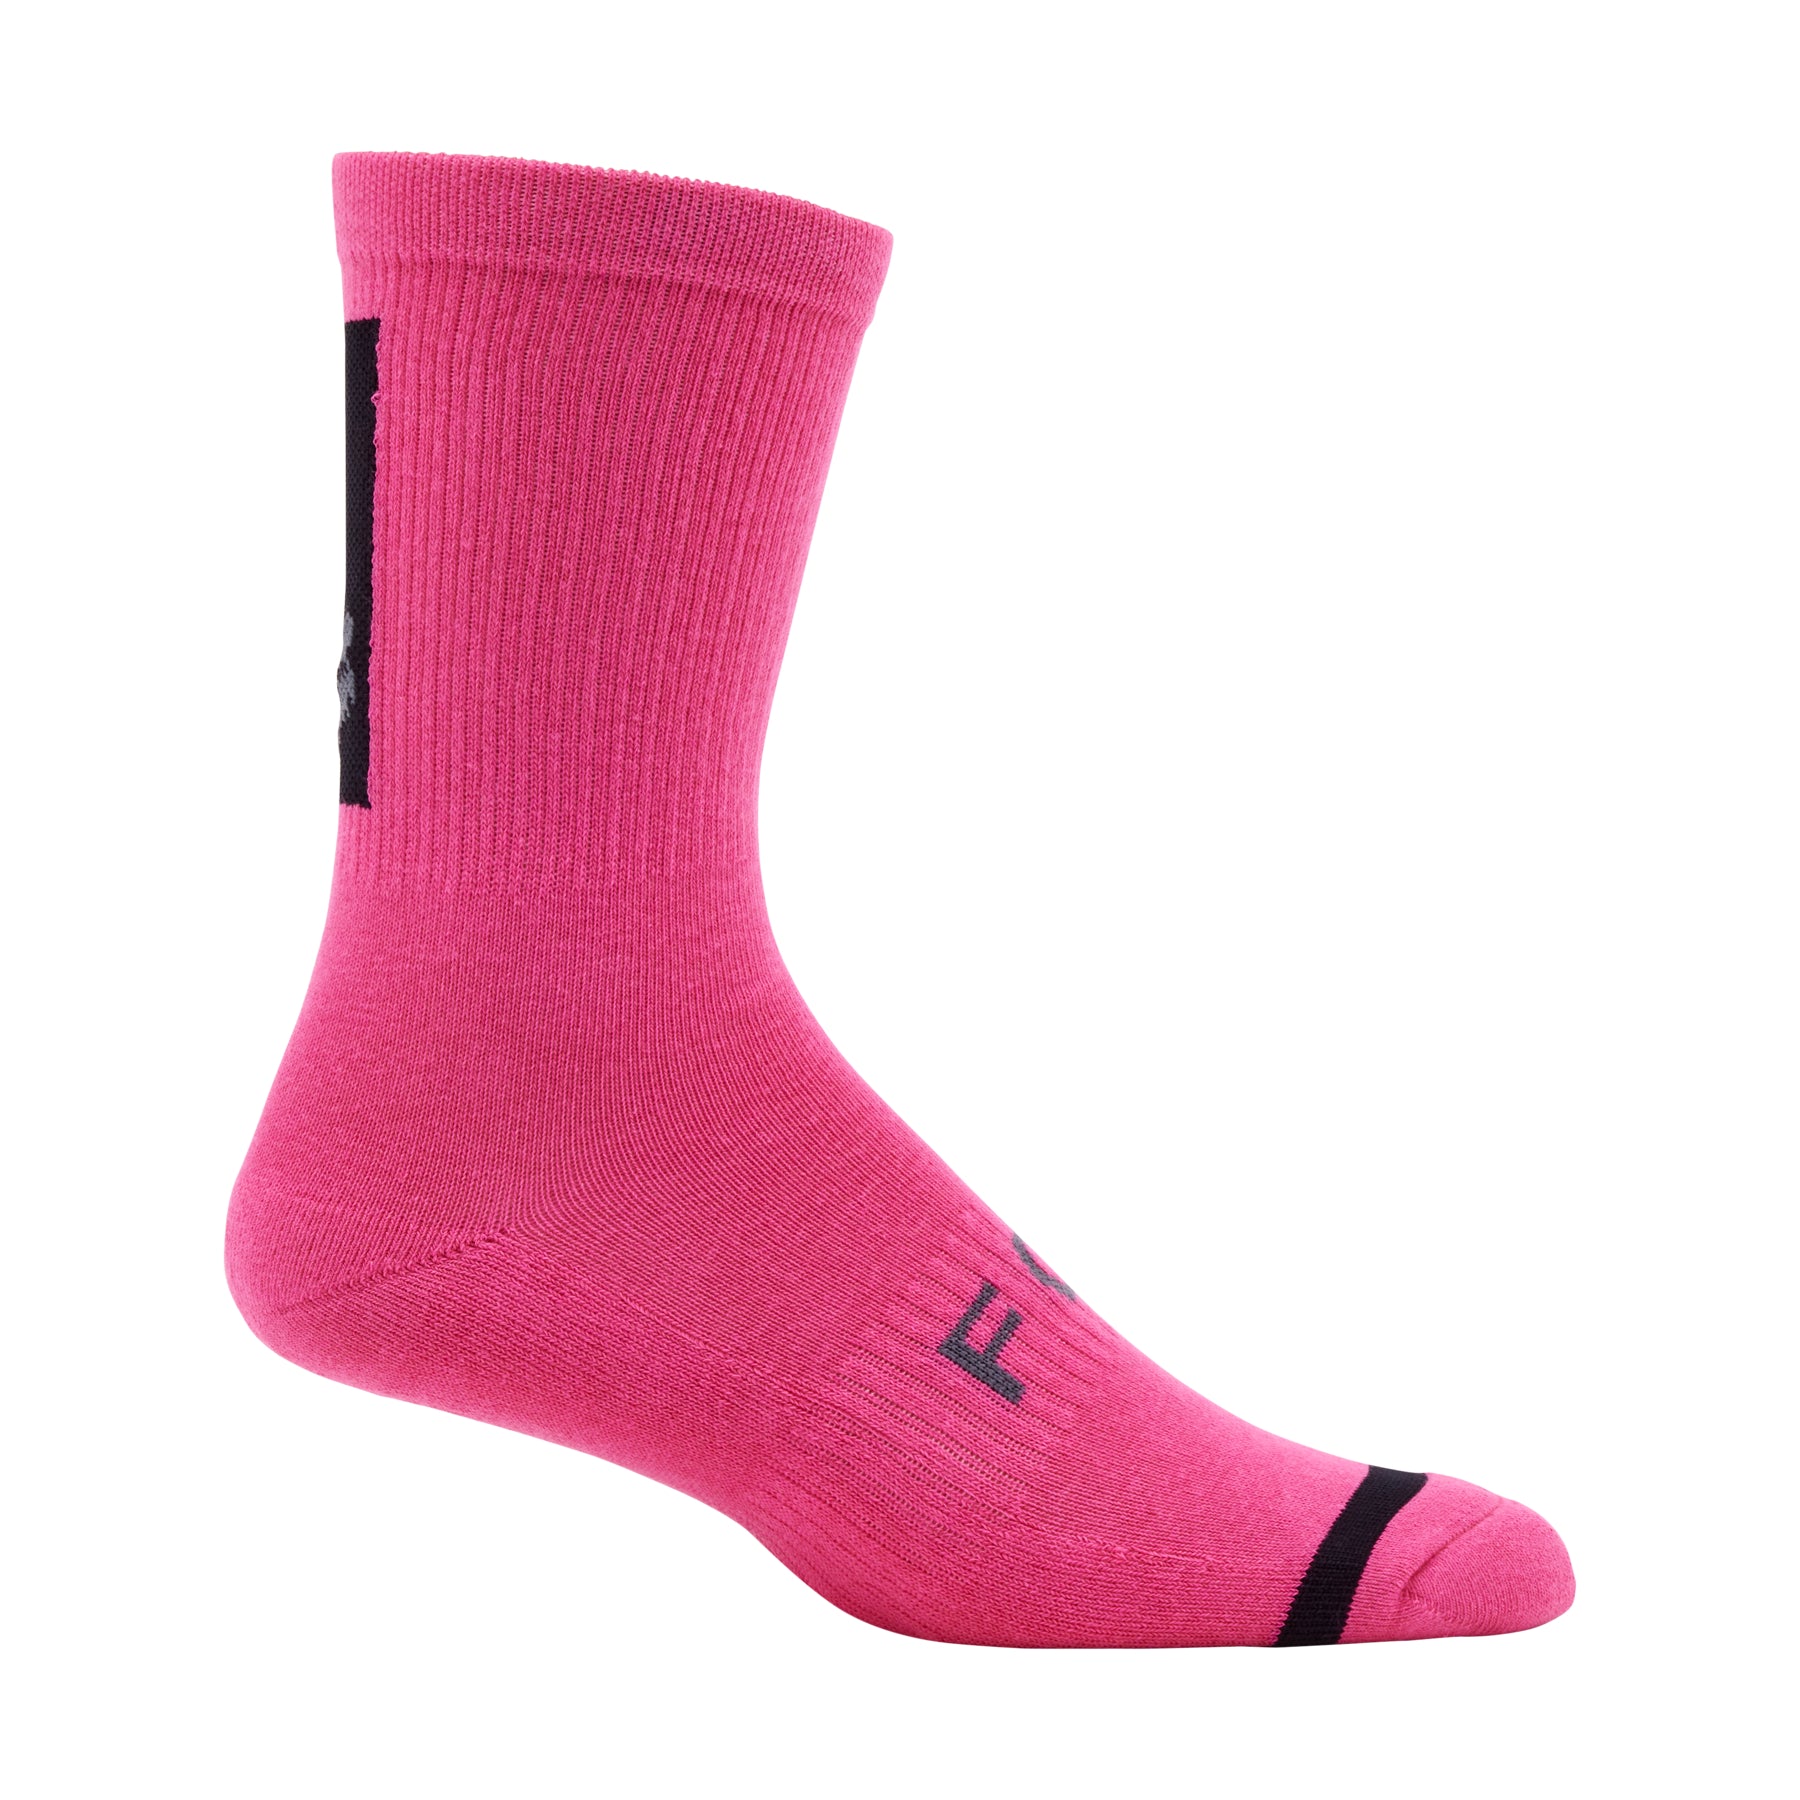 Fox Defend 8 Inch Socks - XS-S - Pink - Image 1